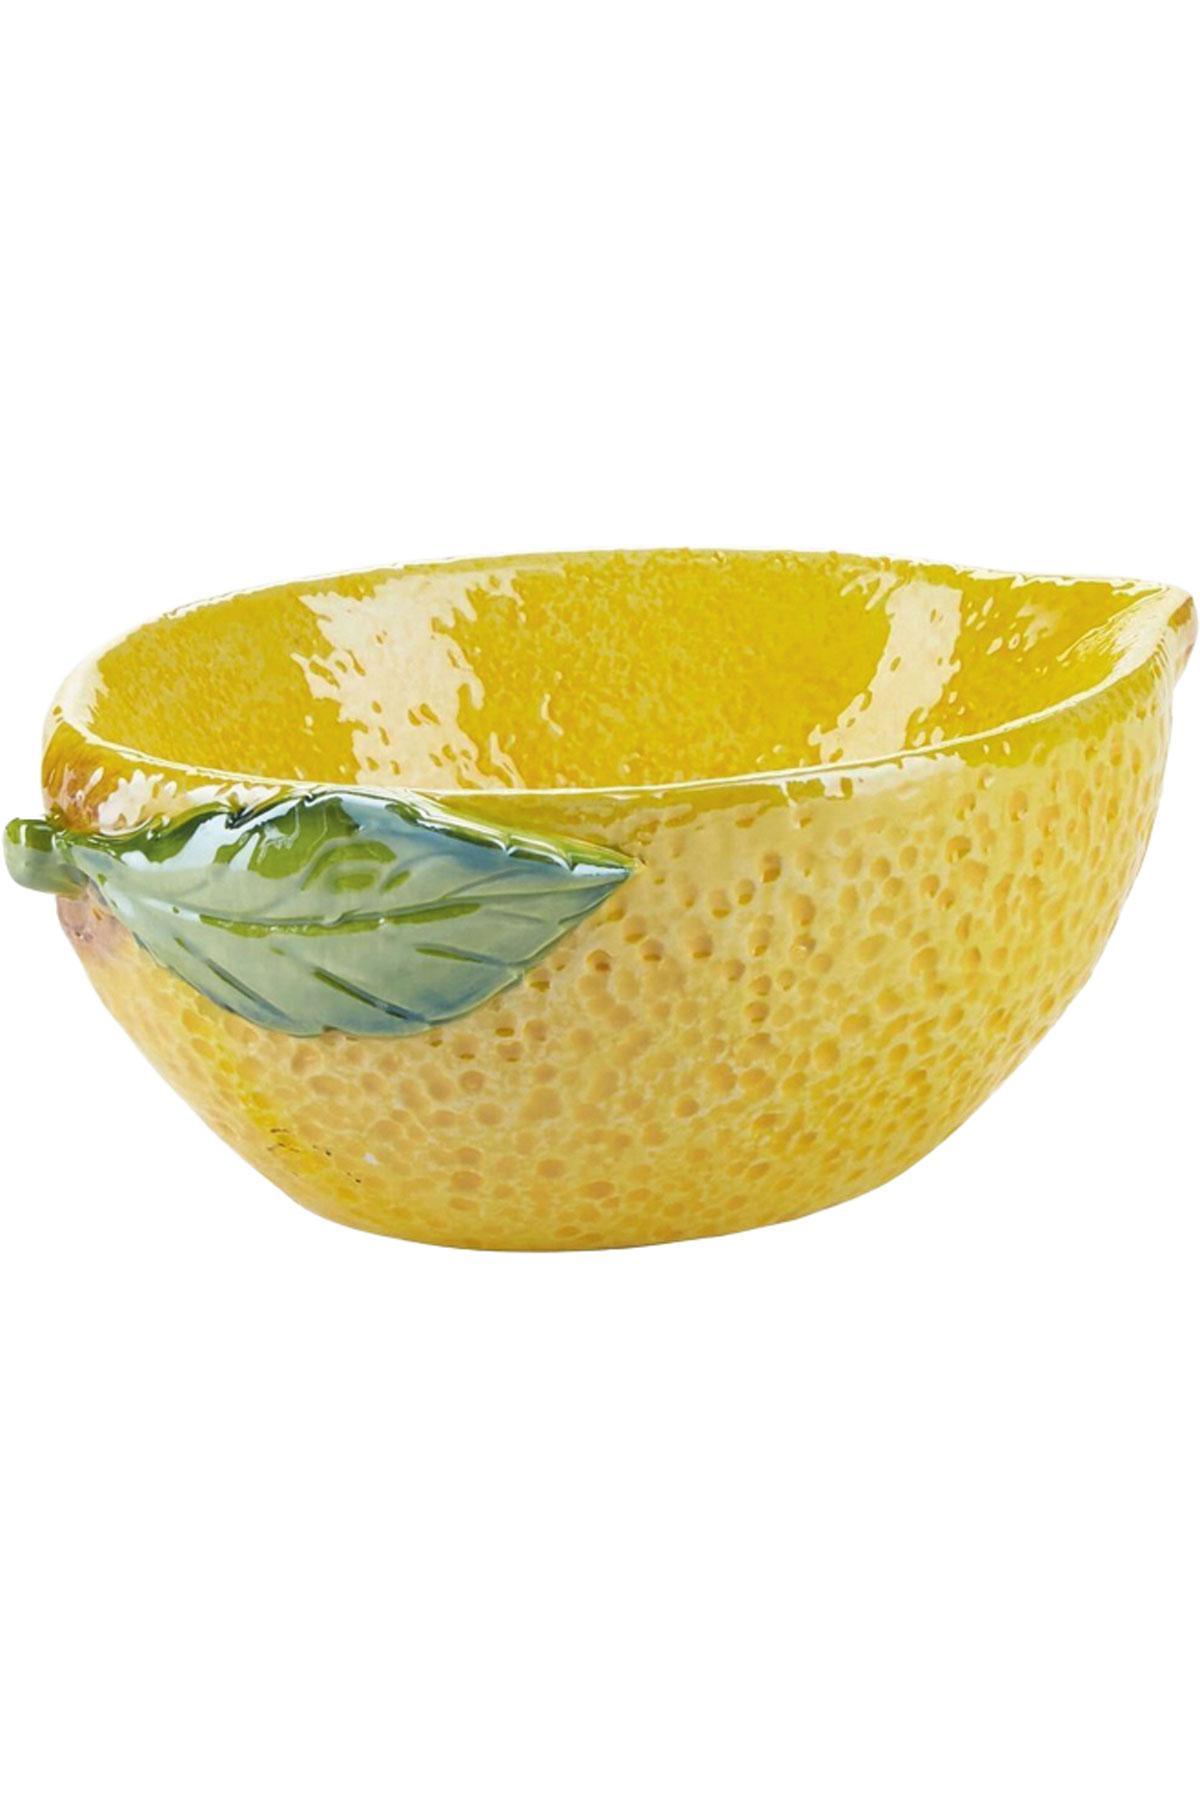 Saladier citron, Bahne @ Jüttu, 9,95 euros -  